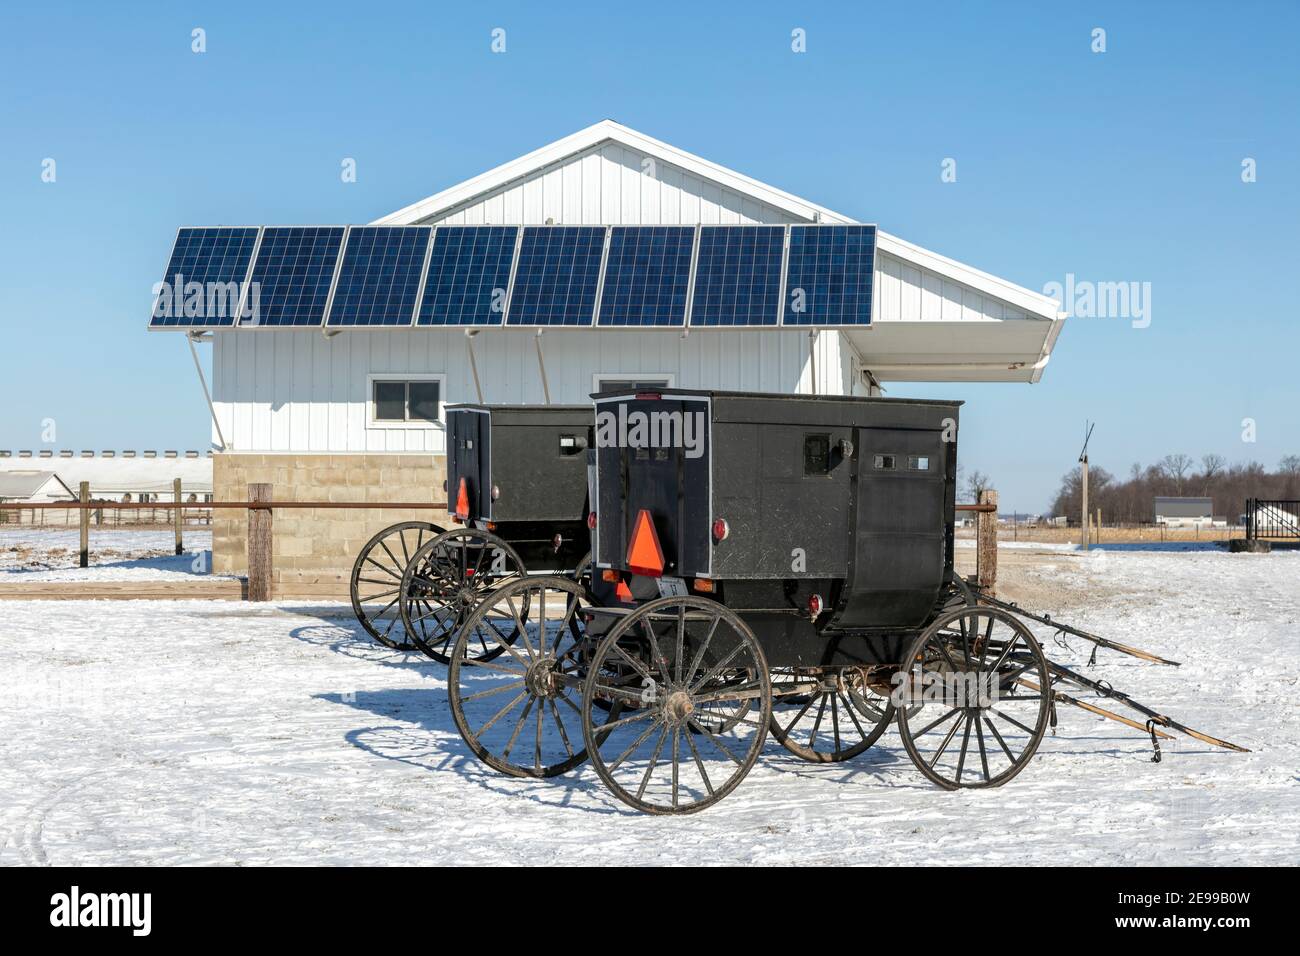 Amish Farm mit Sonnenkollektoren, Indiana, USA, von James D. Coppinger/Dembinsky Photo Assoc Stockfoto